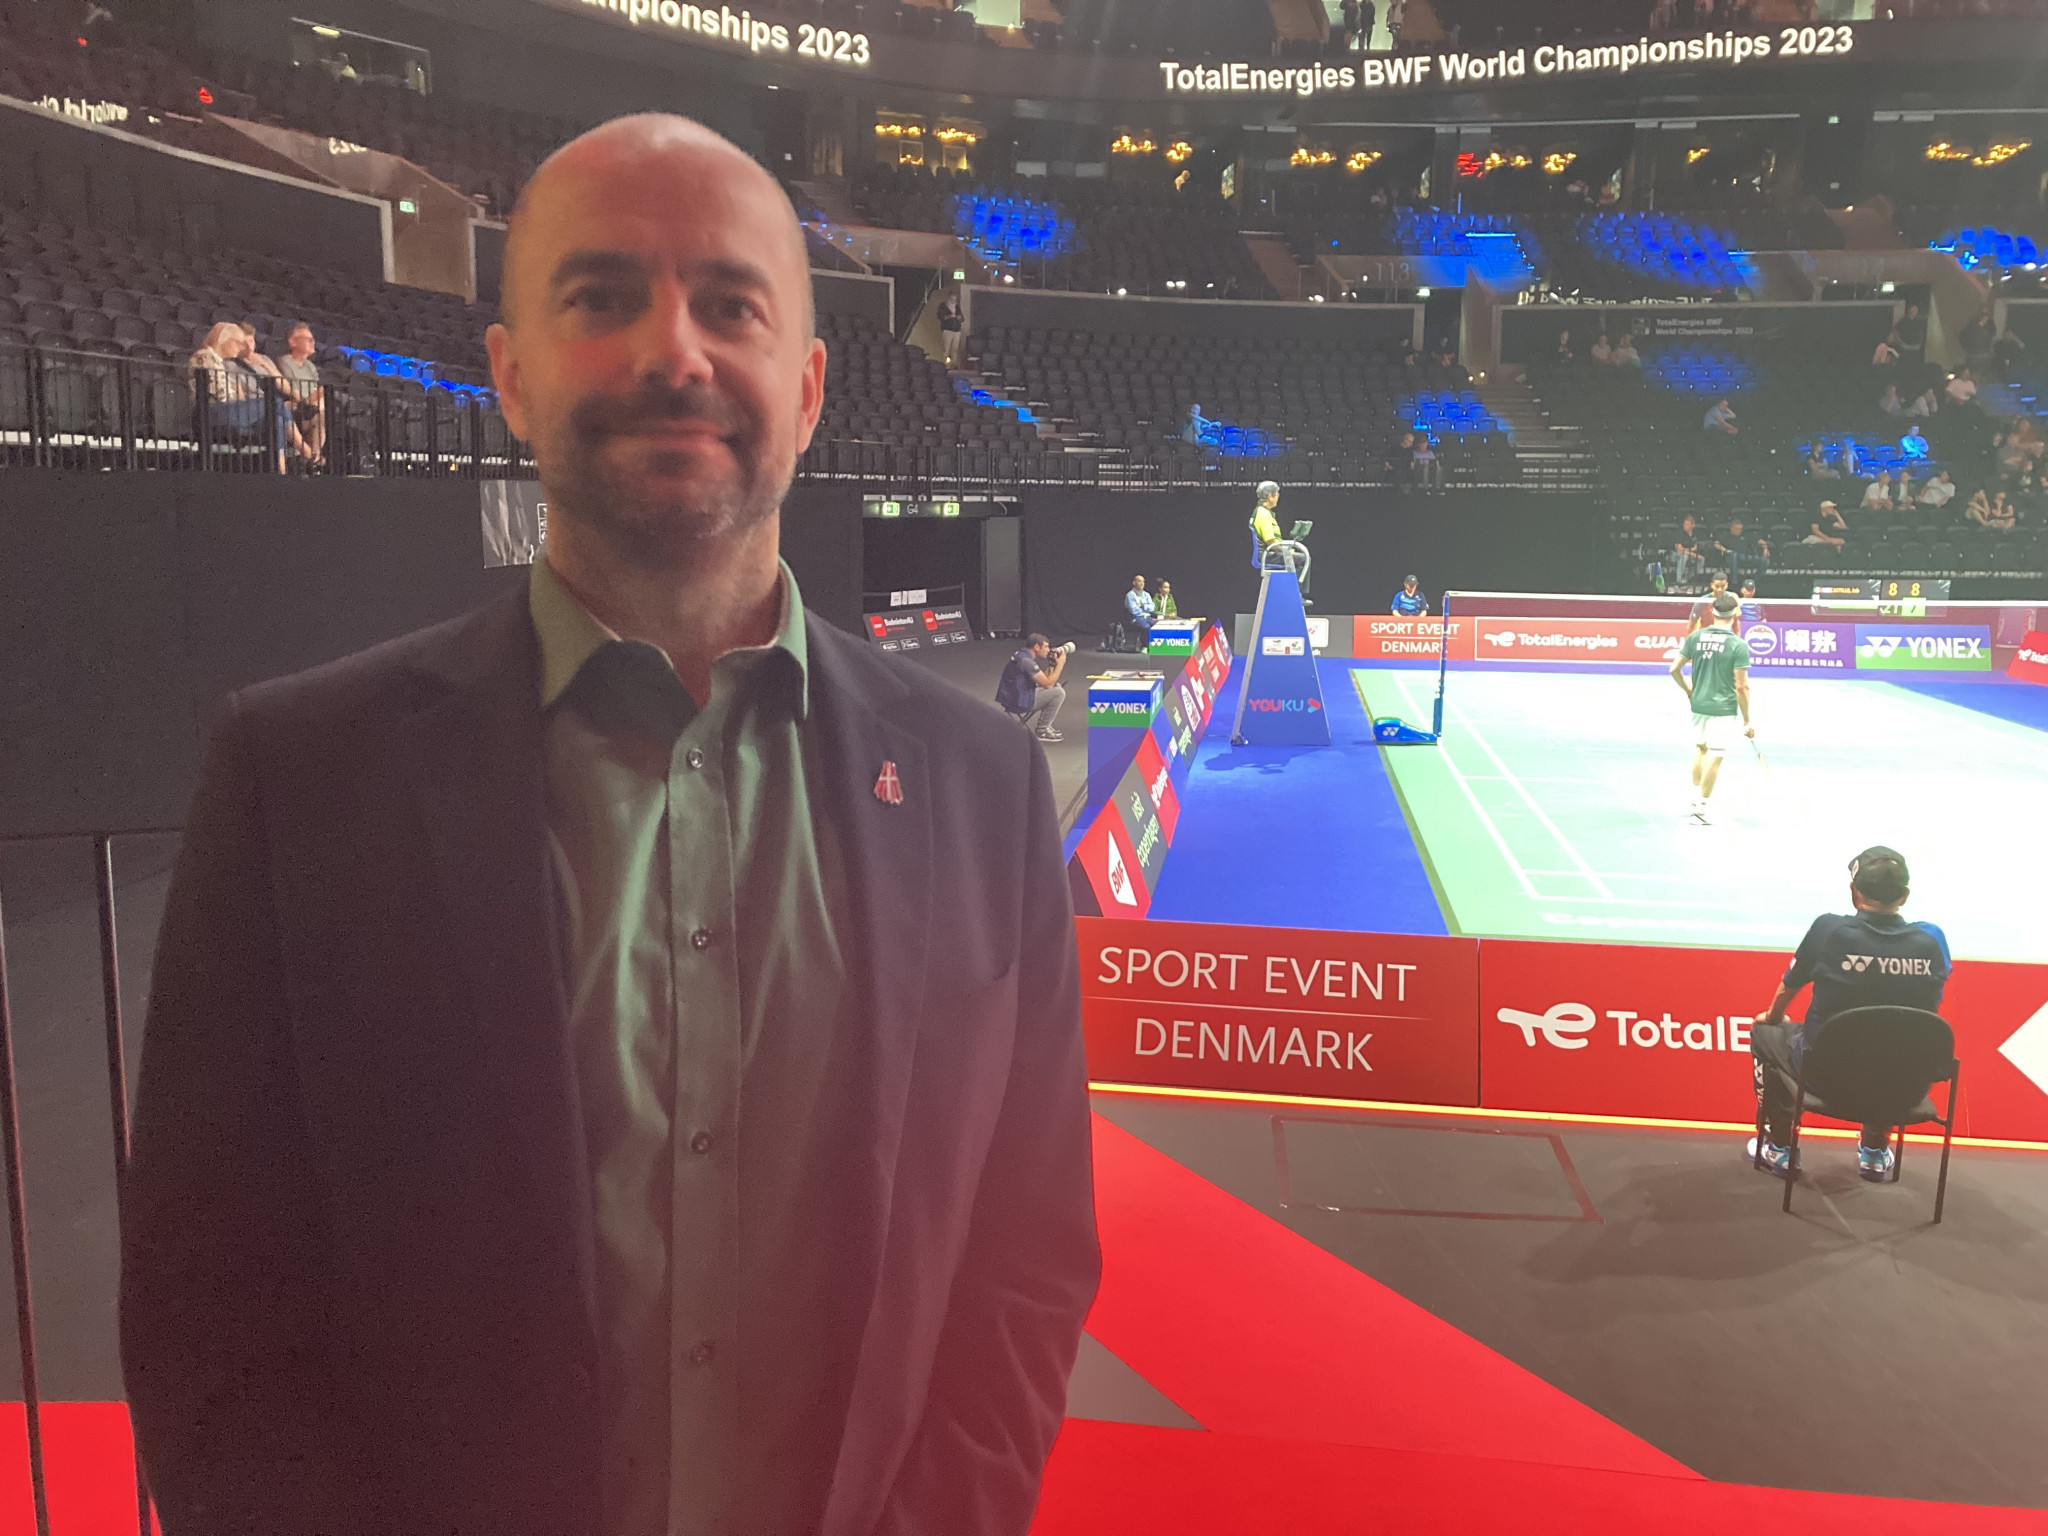 Exclusive: Badminton Denmark wants to host 2030 BWF World Championships to mark century